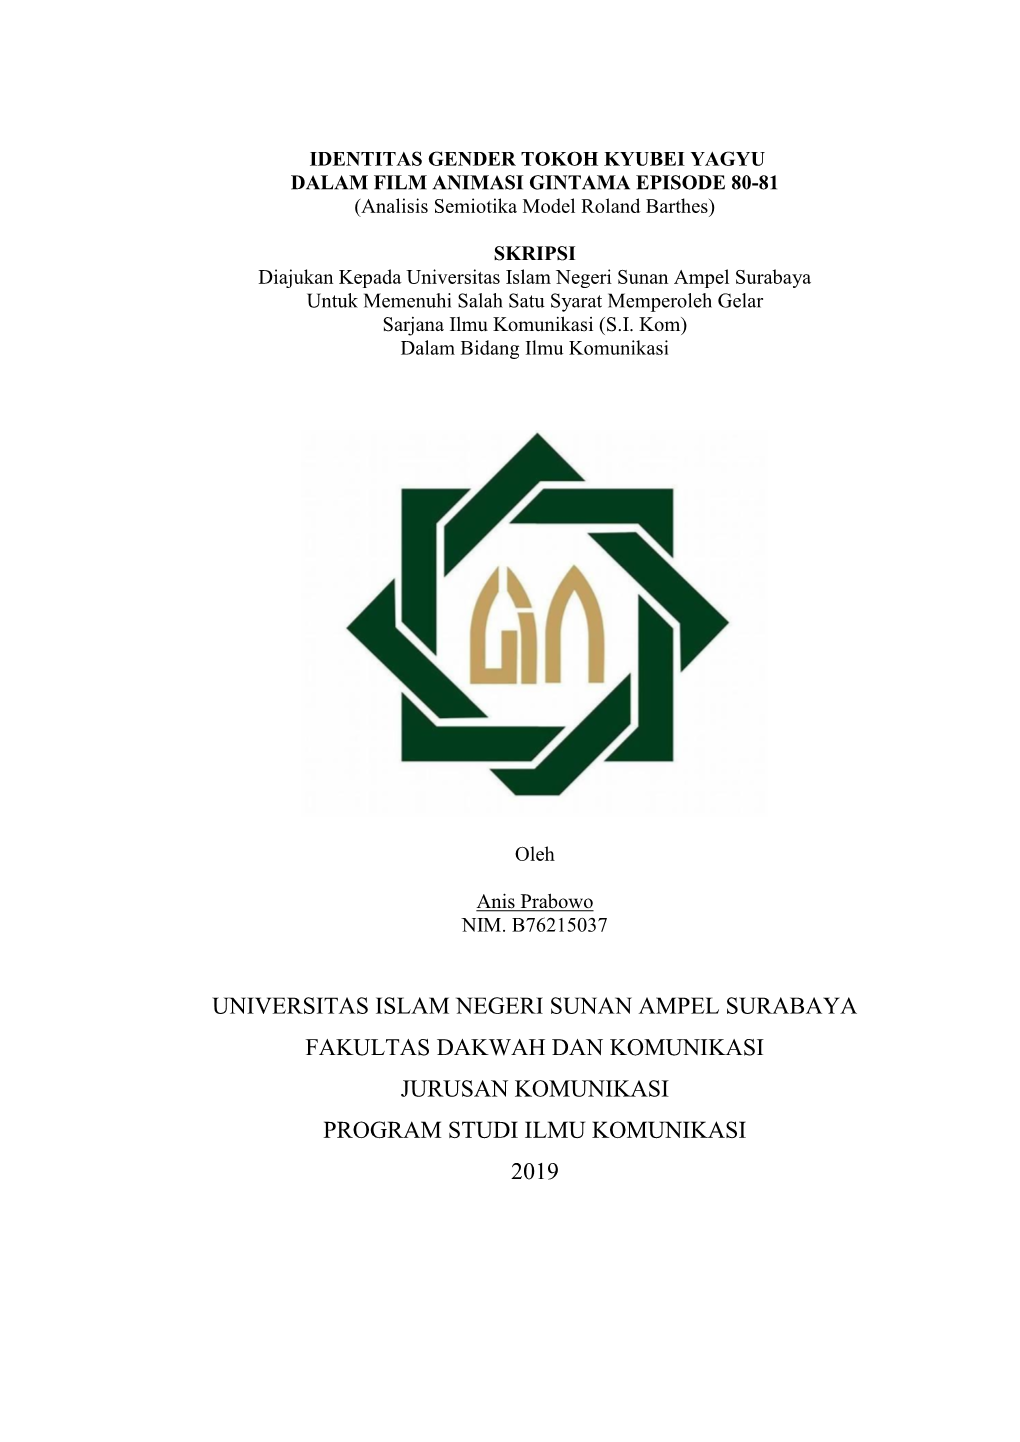 Universitas Islam Negeri Sunan Ampel Surabaya Fakultas Dakwah Dan Komunikasi Jurusan Komunikasi Program Studi Ilmu Komunikasi 2019